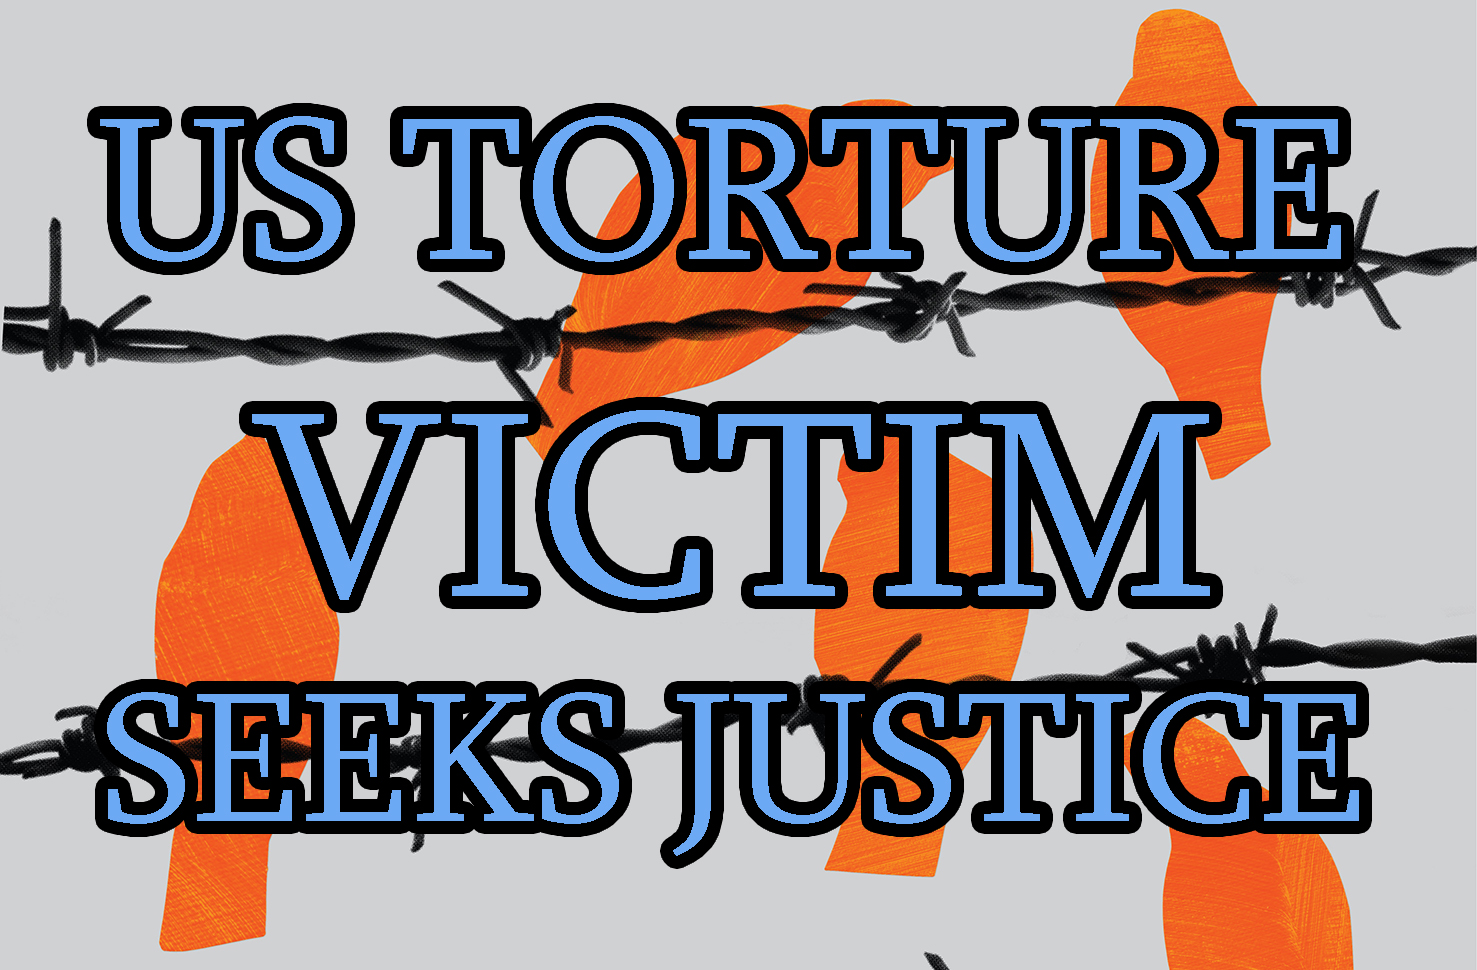 TDP: US Torture Victim Seeks Justice